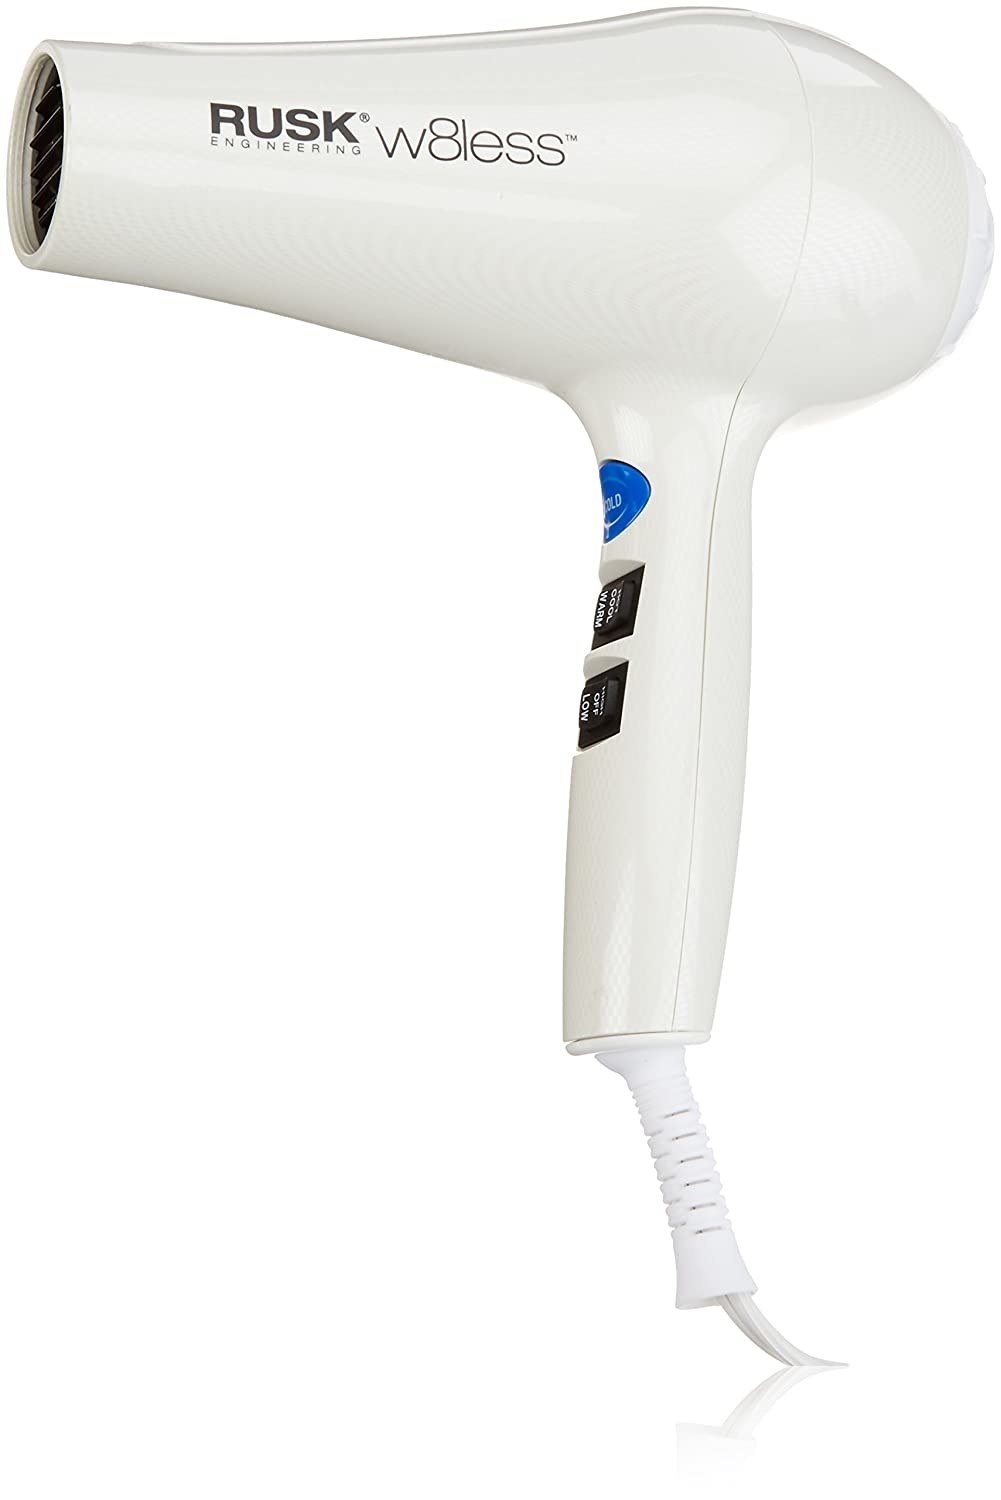 the white hair dryer